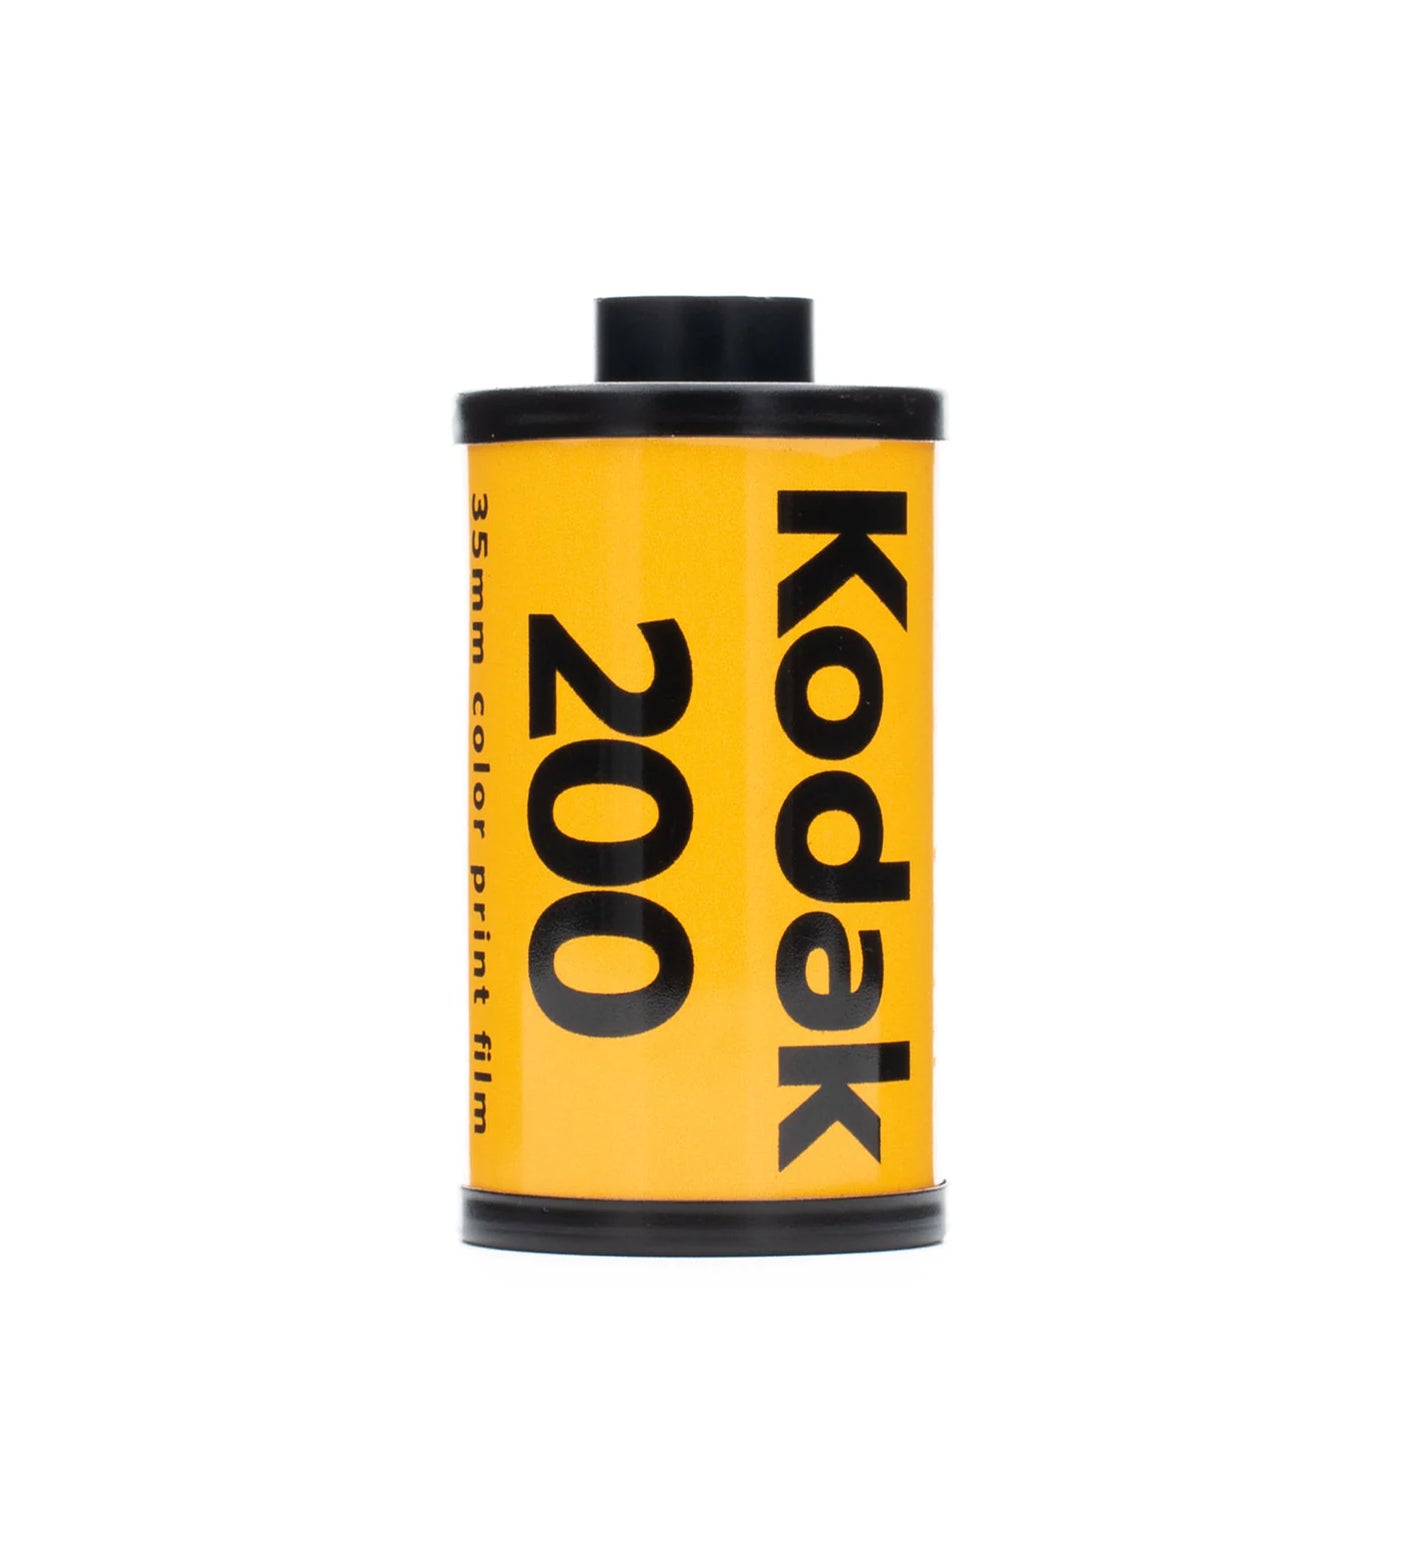 Kodak Gold 200 35mm Film 36 Exposures (£9.99 incl VAT)